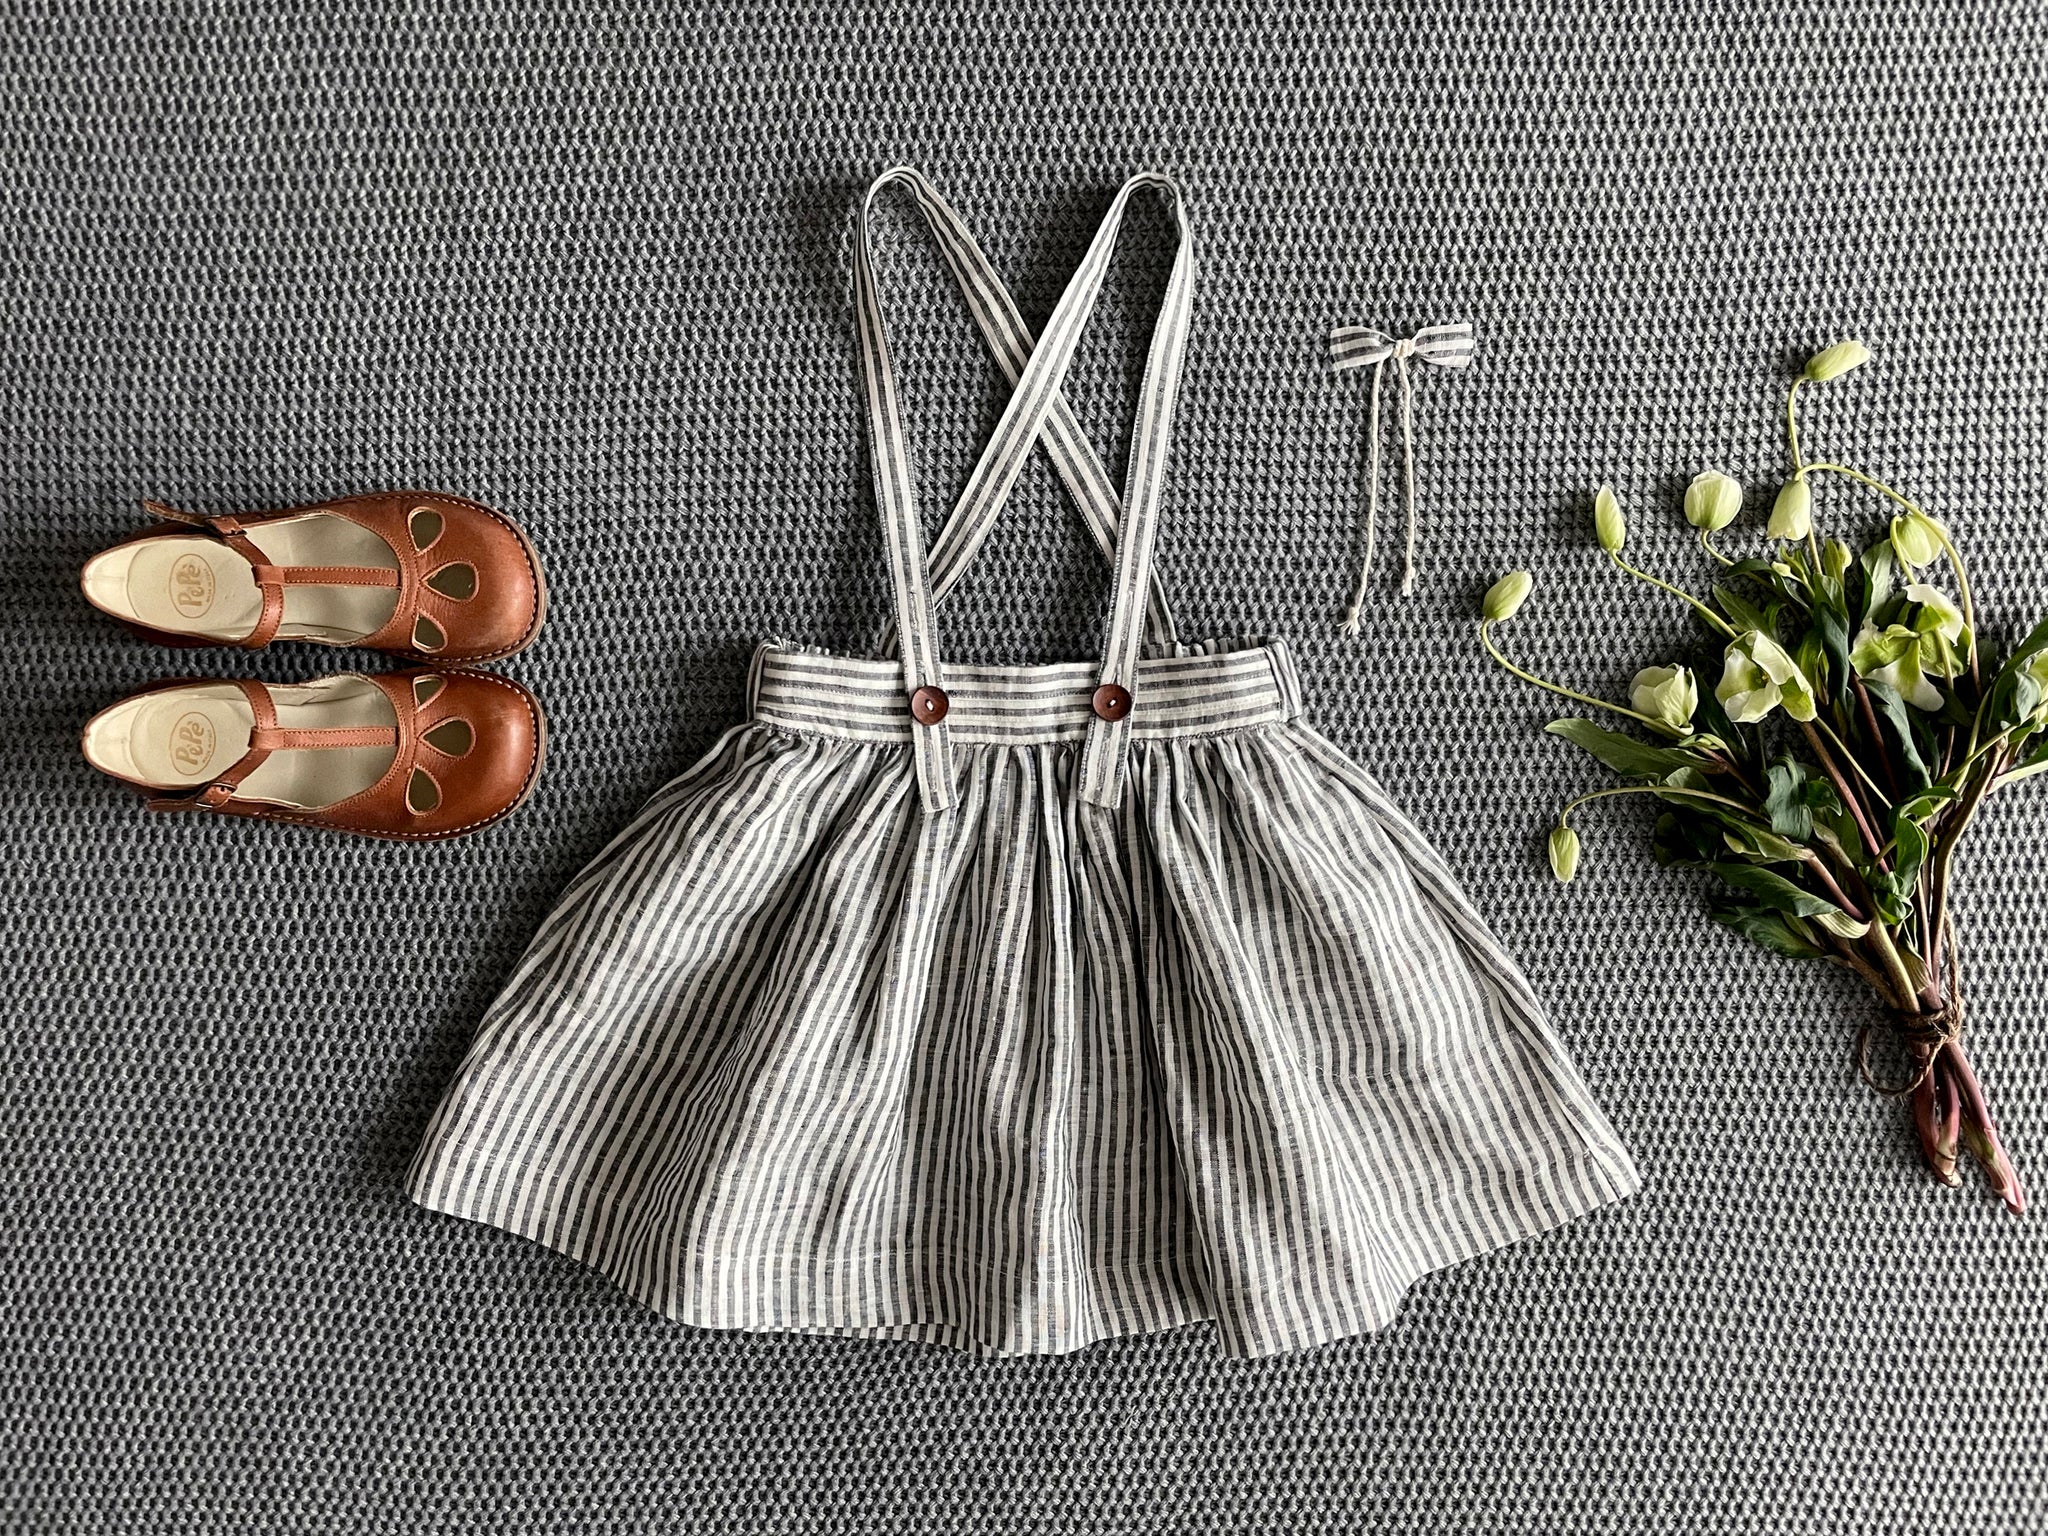 Pinafore Skirt - Stripe